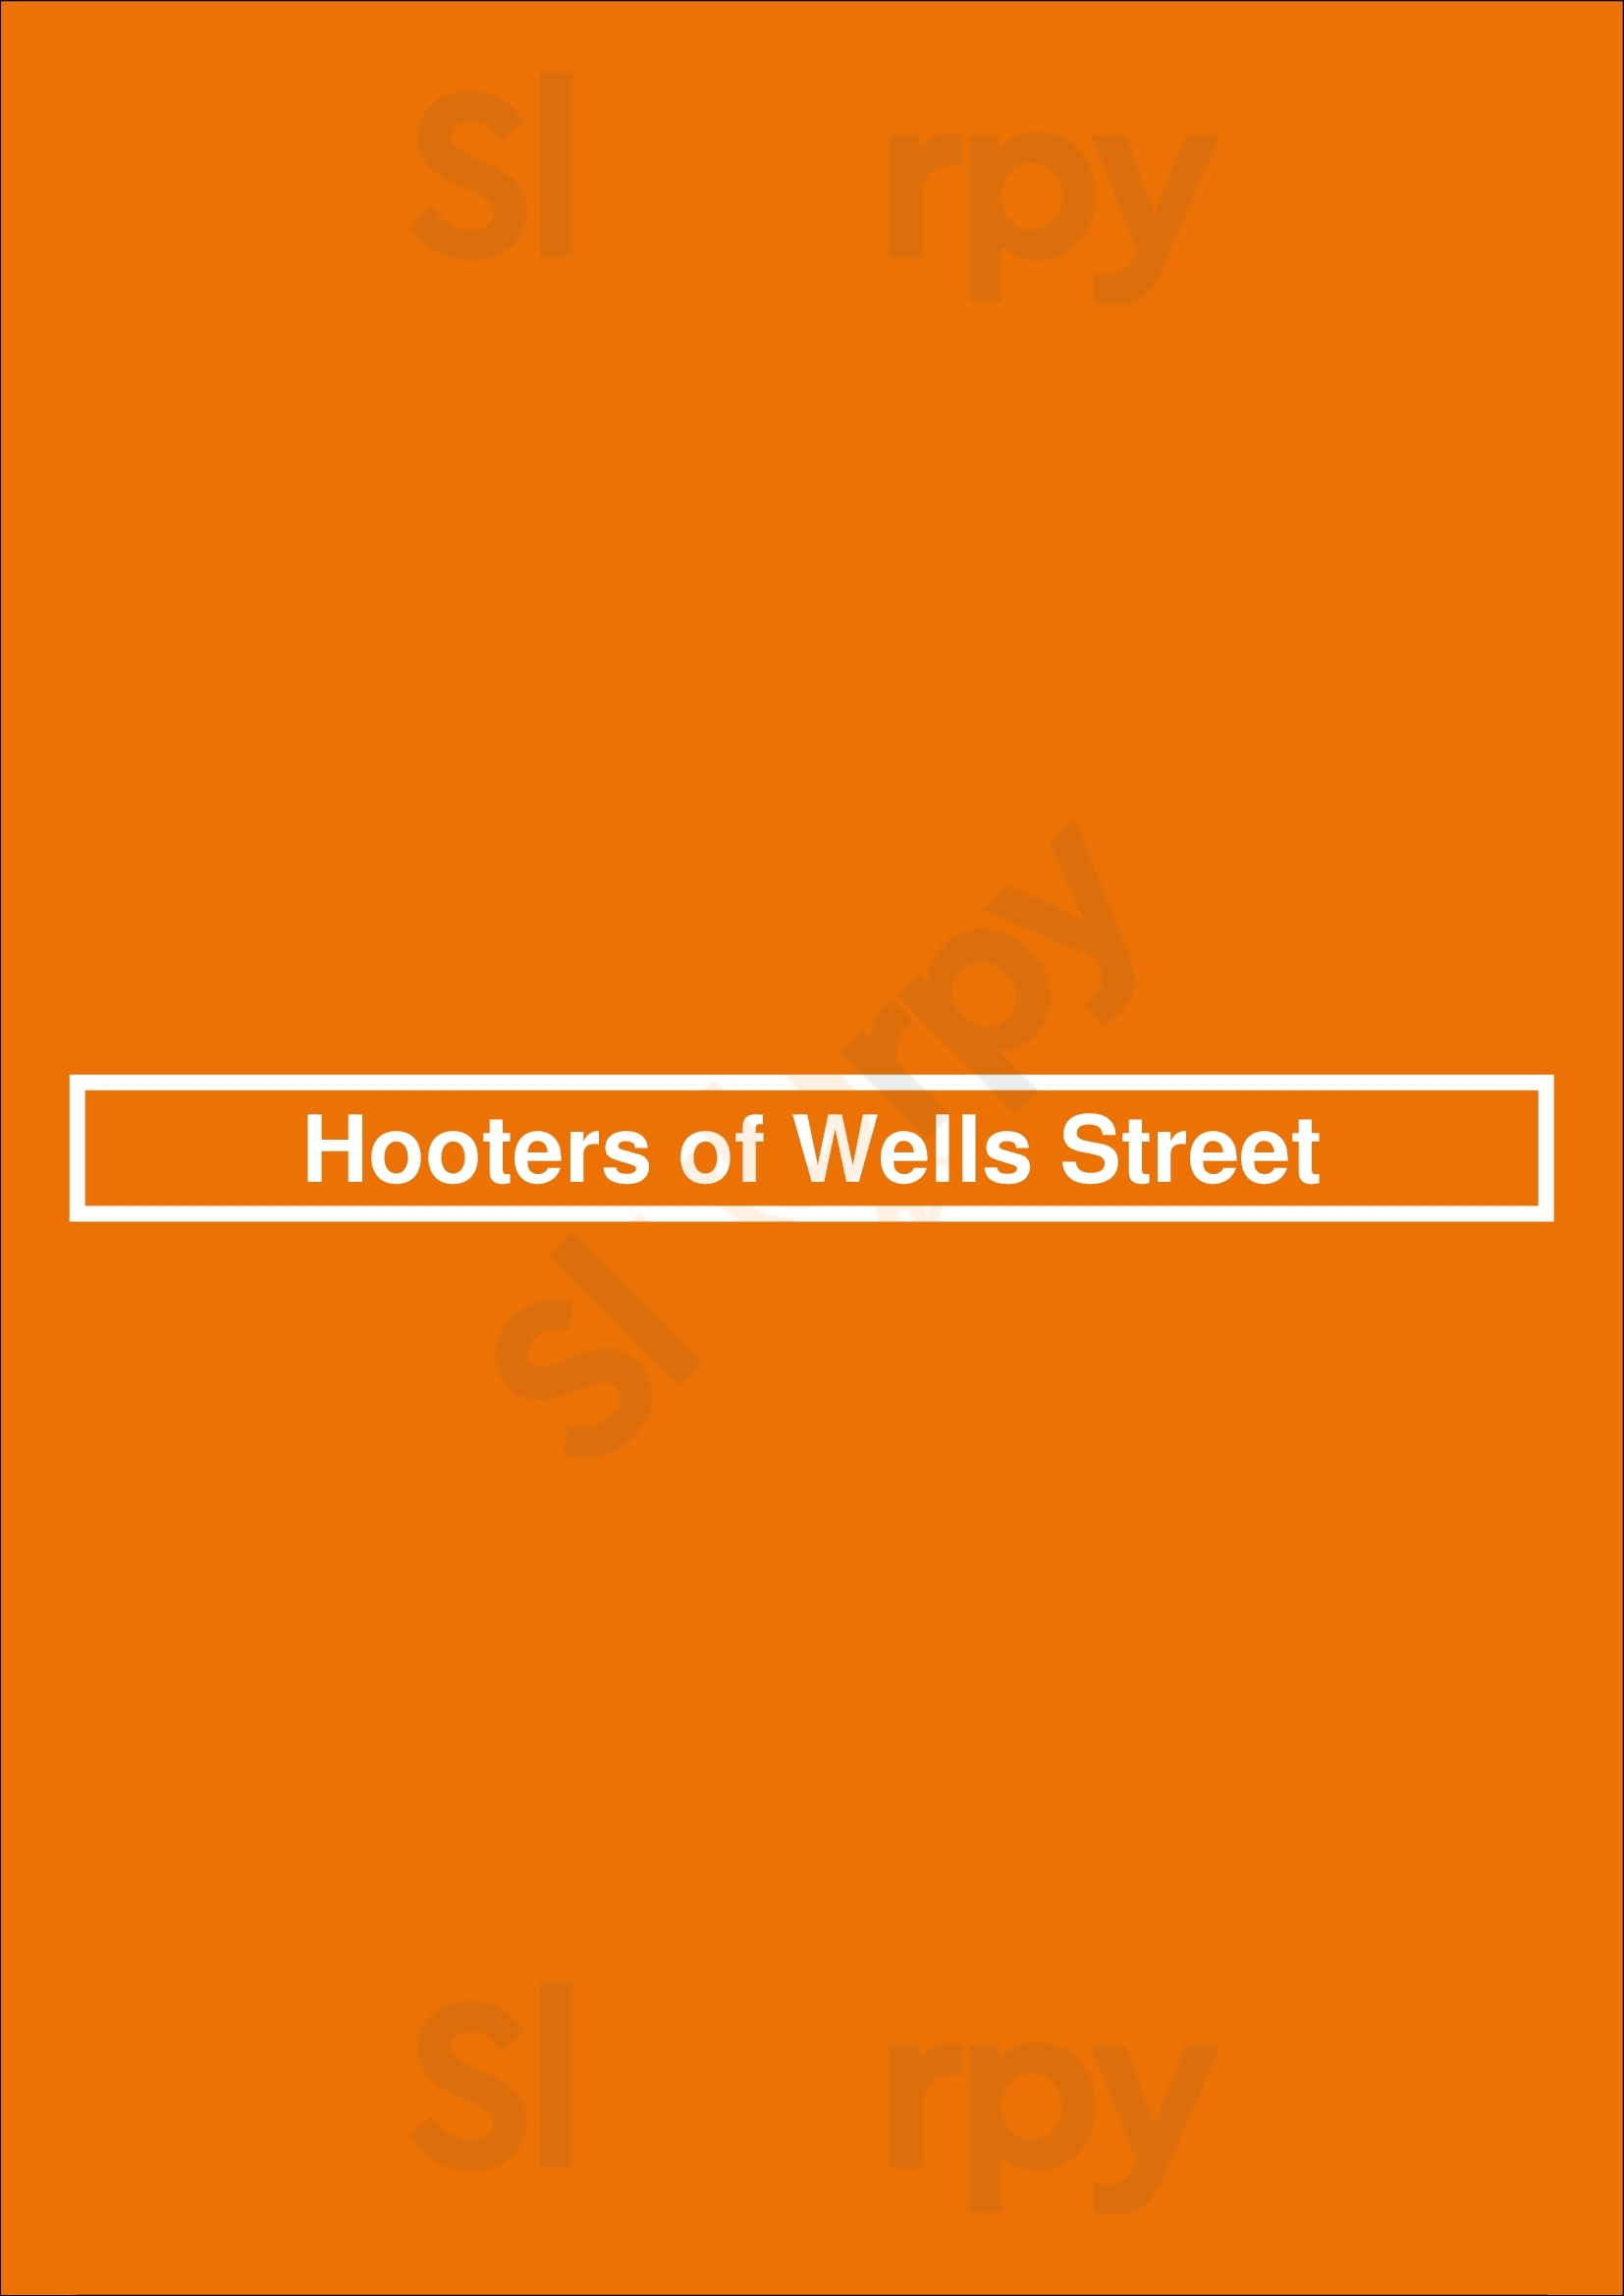 Hooters Of Wells Street Chicago Menu - 1